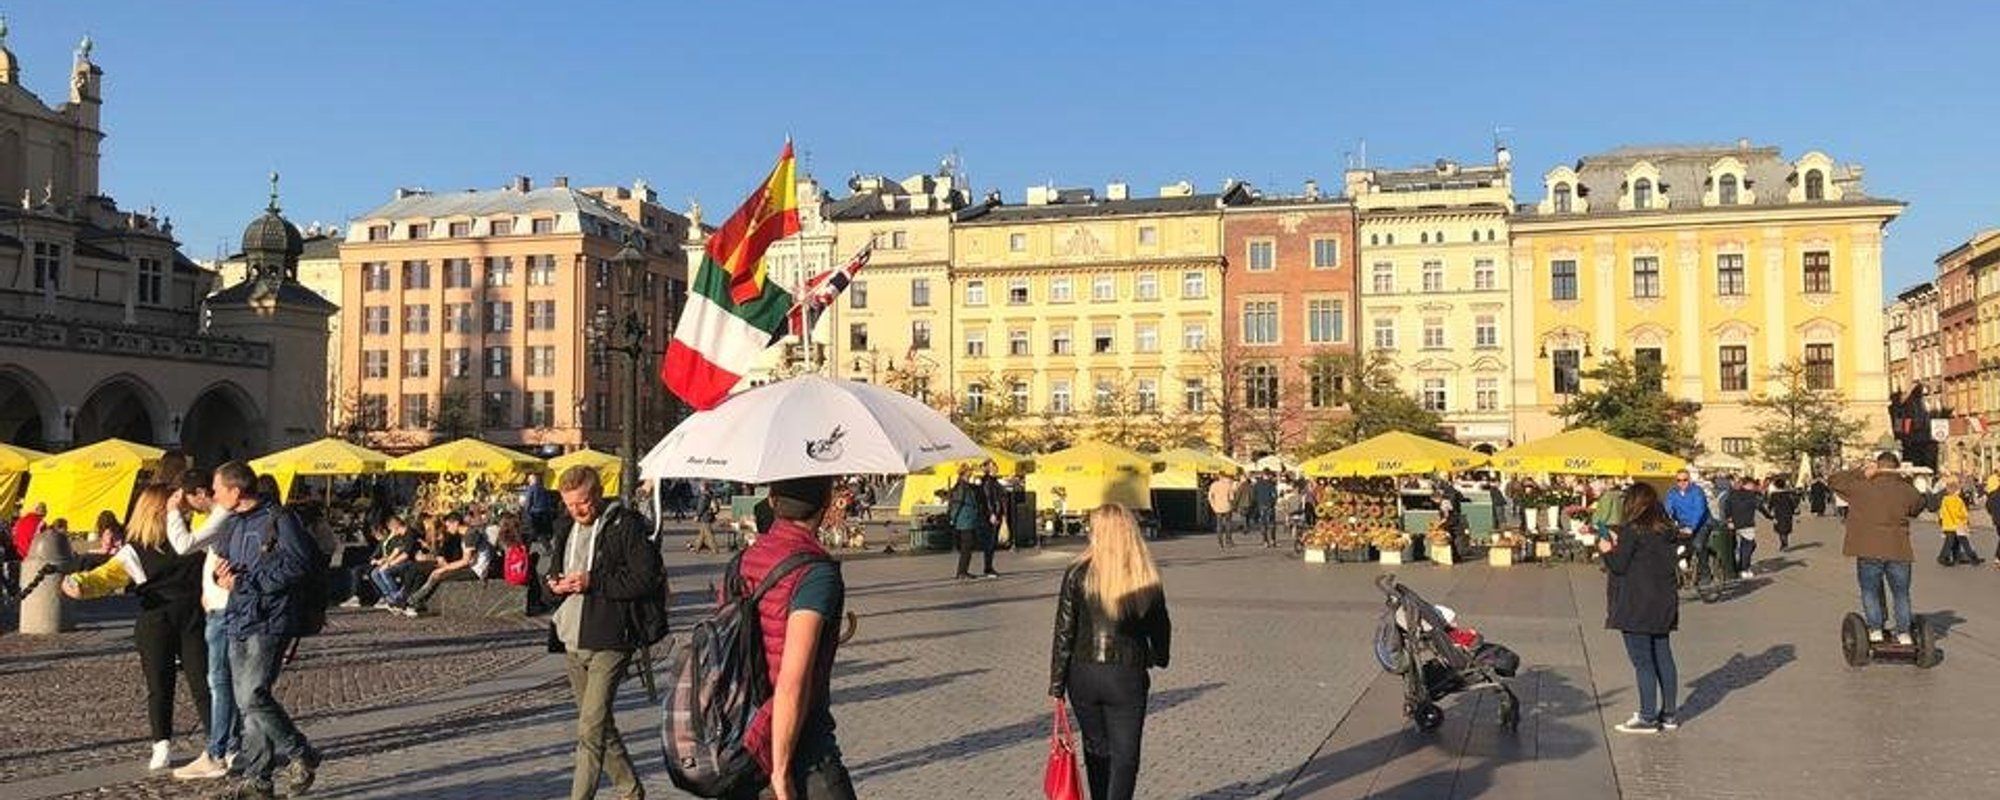 Traveling the World #151 - Let’s Visit Main Square @ Krakow, Poland